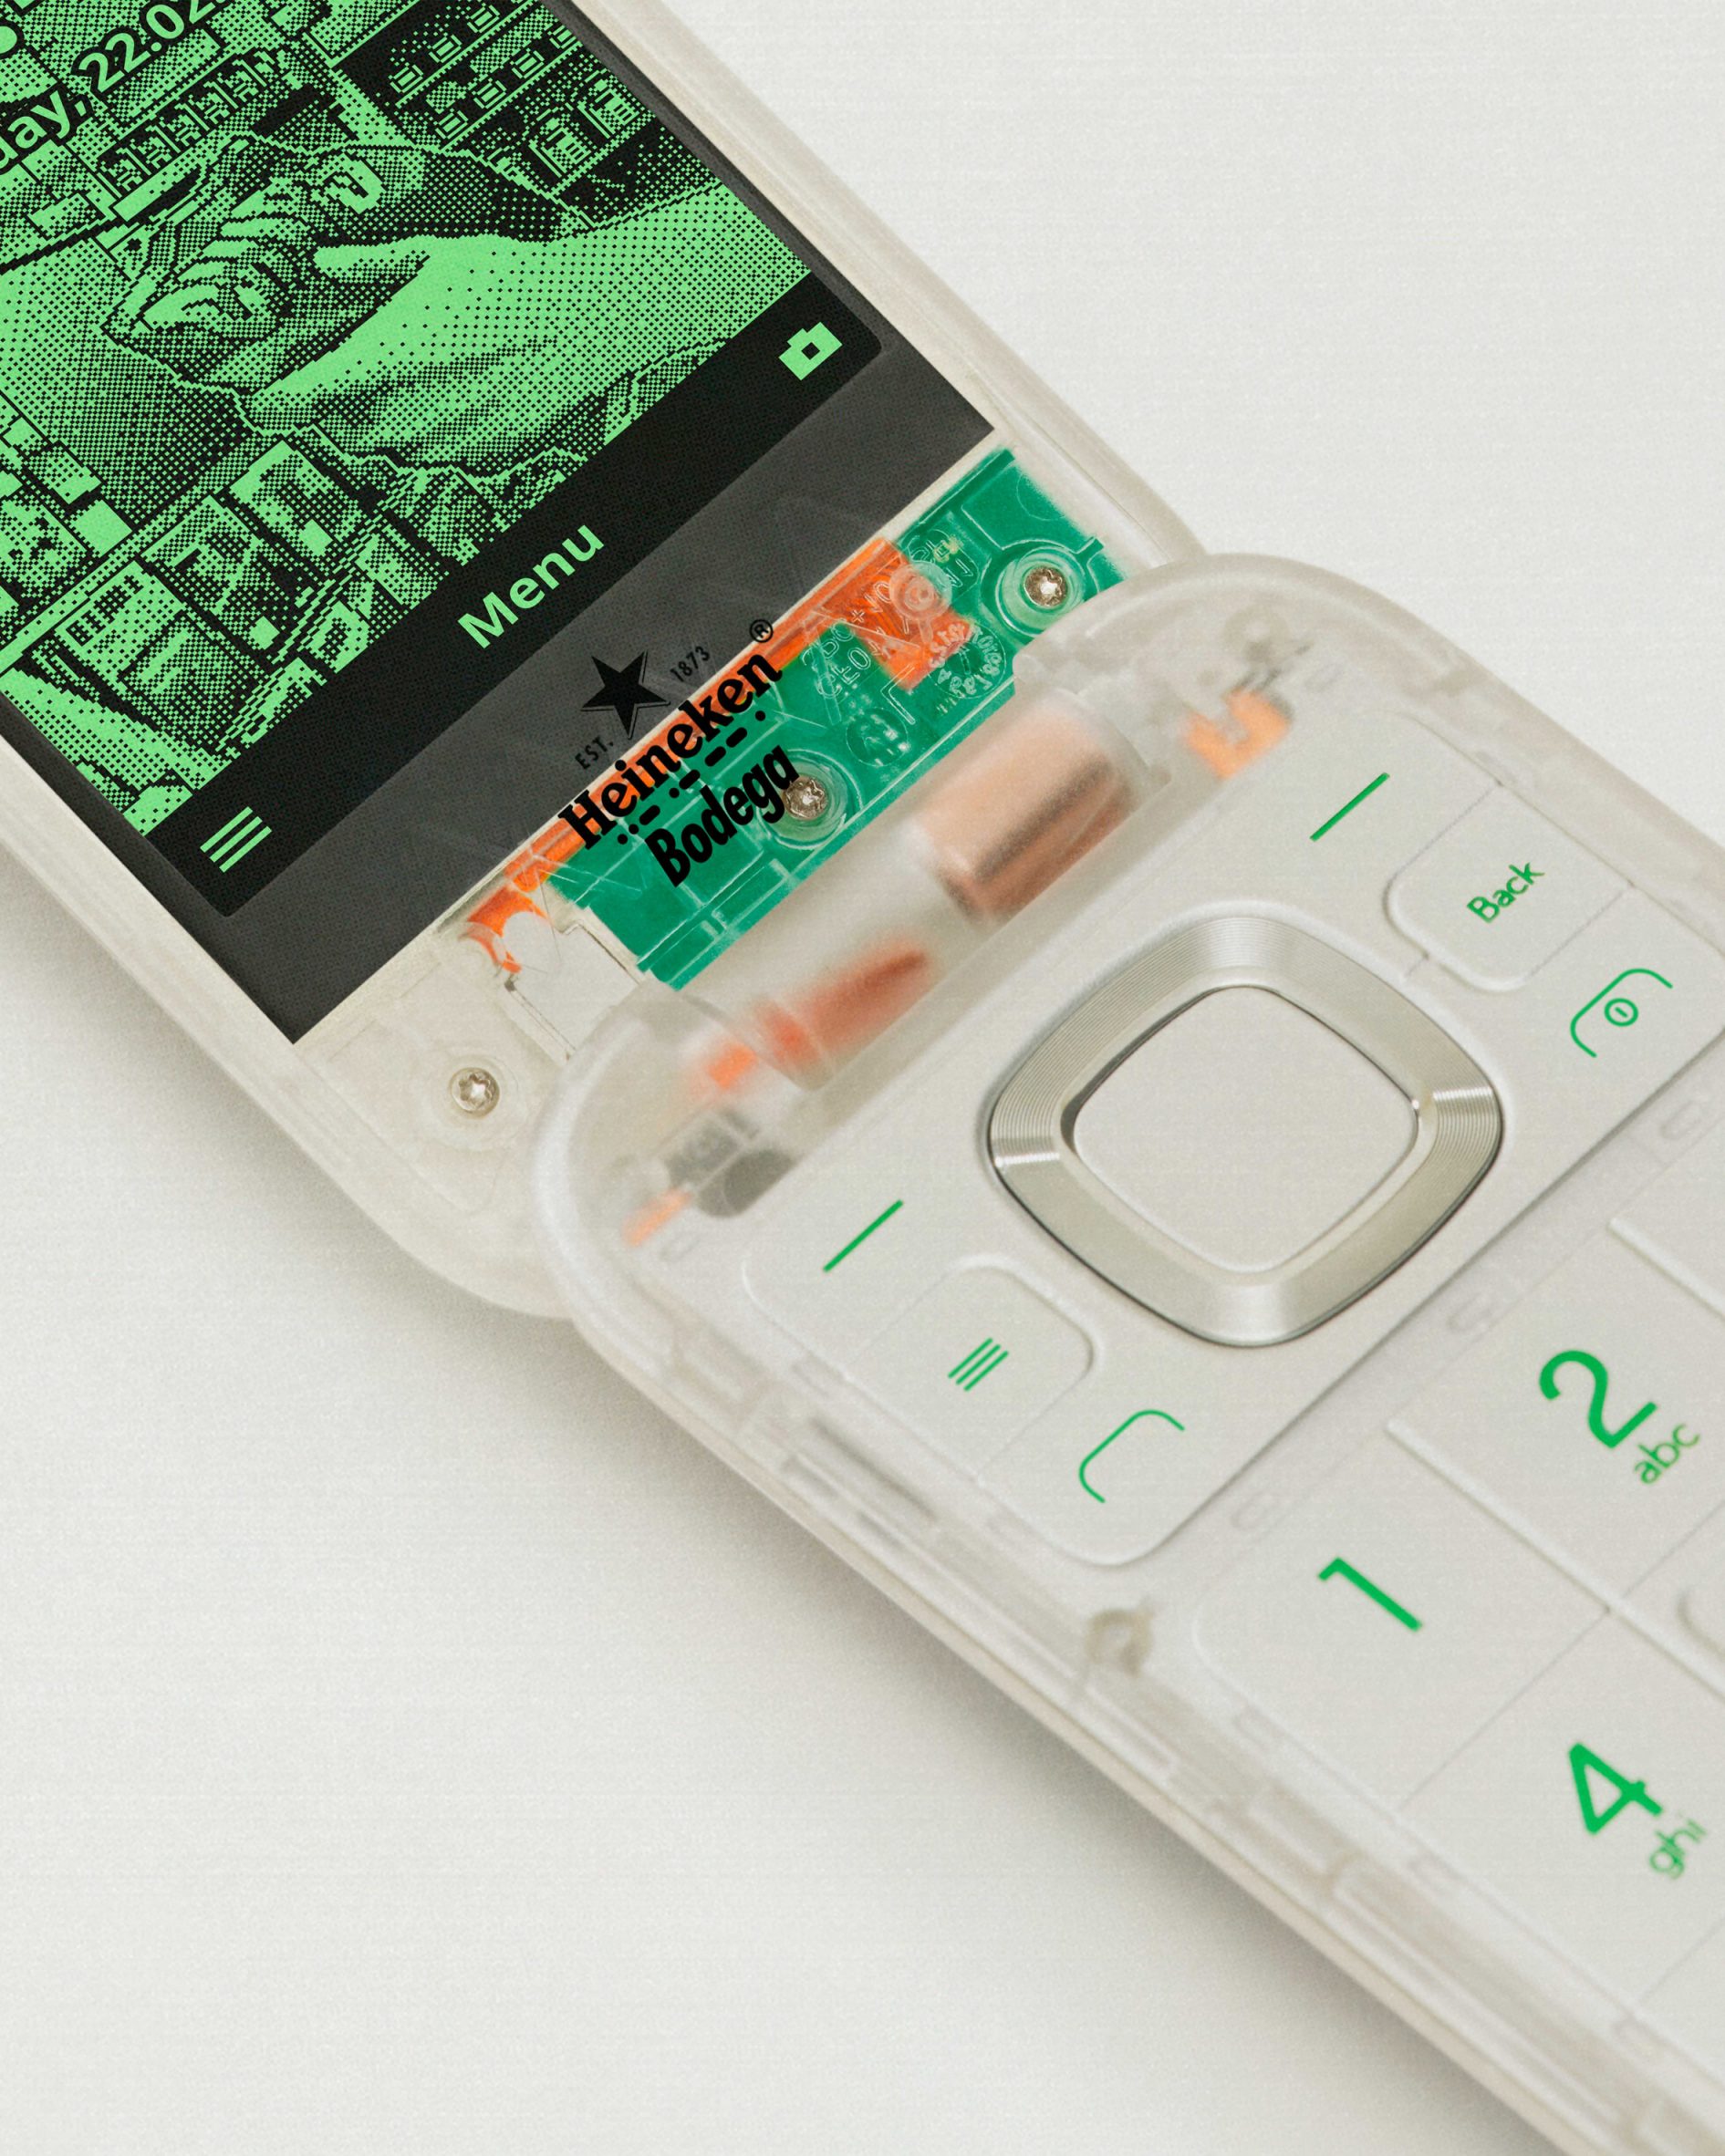 Dumb phone designed by Heineken and Bodega